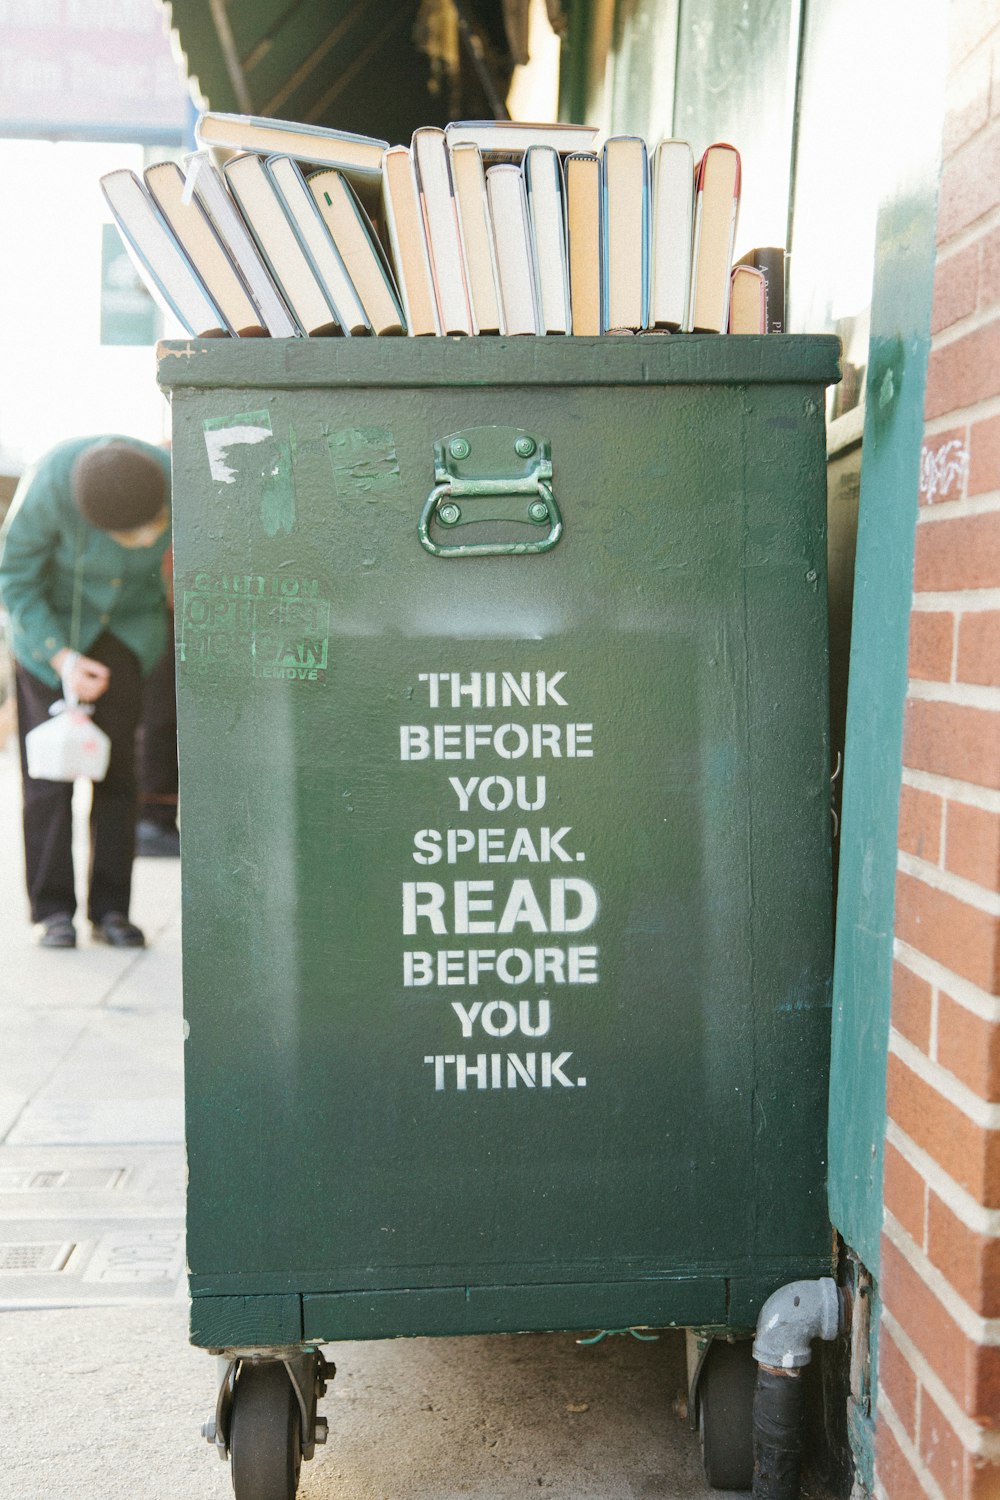 books over green trolley bin